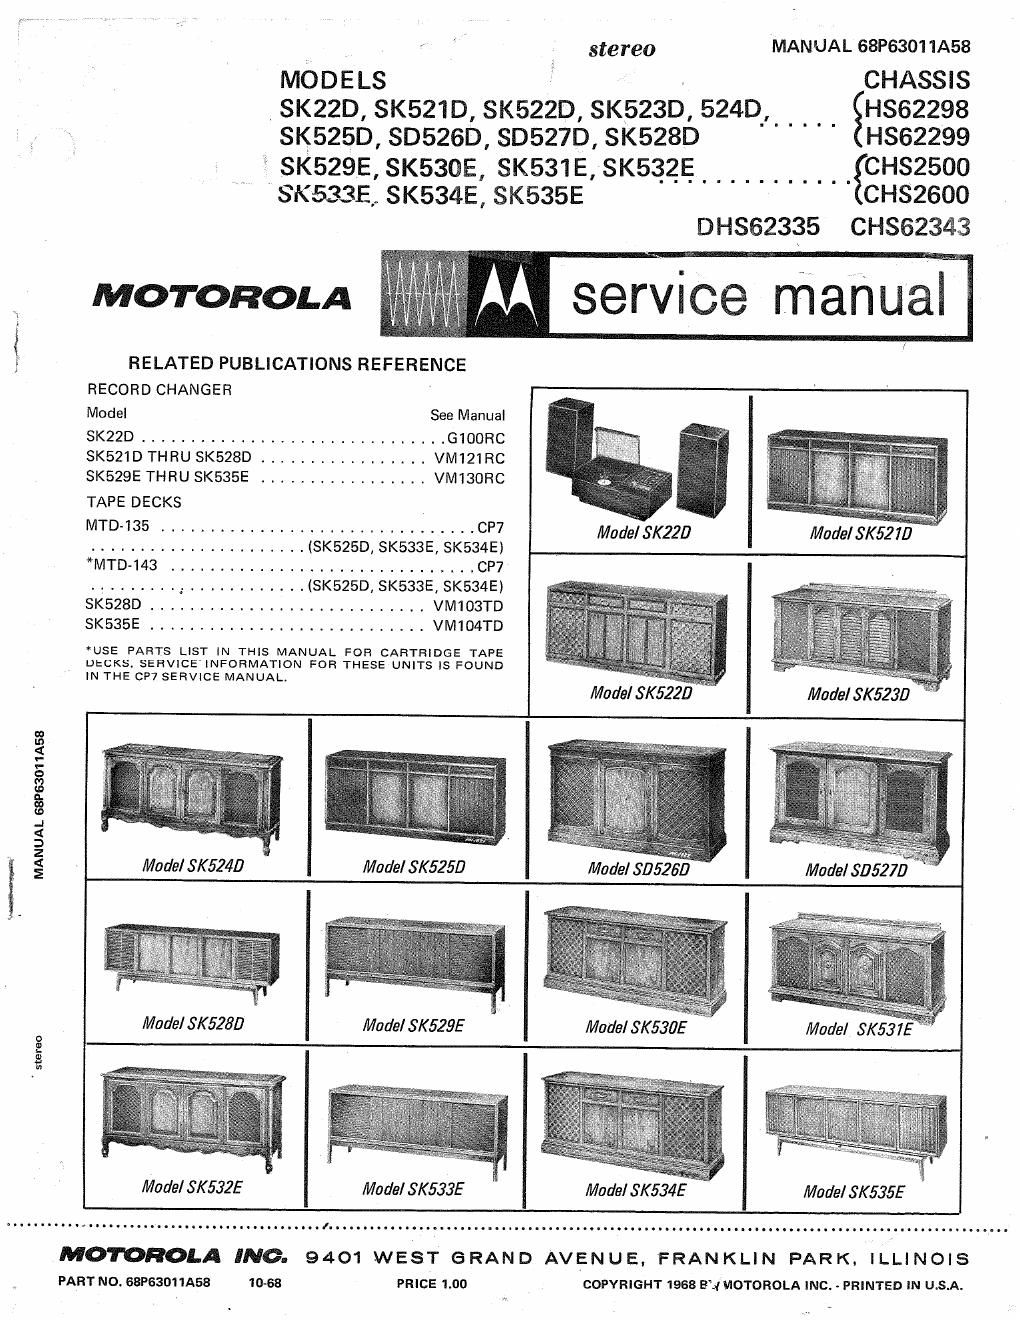 motorola sk 533 e service manual